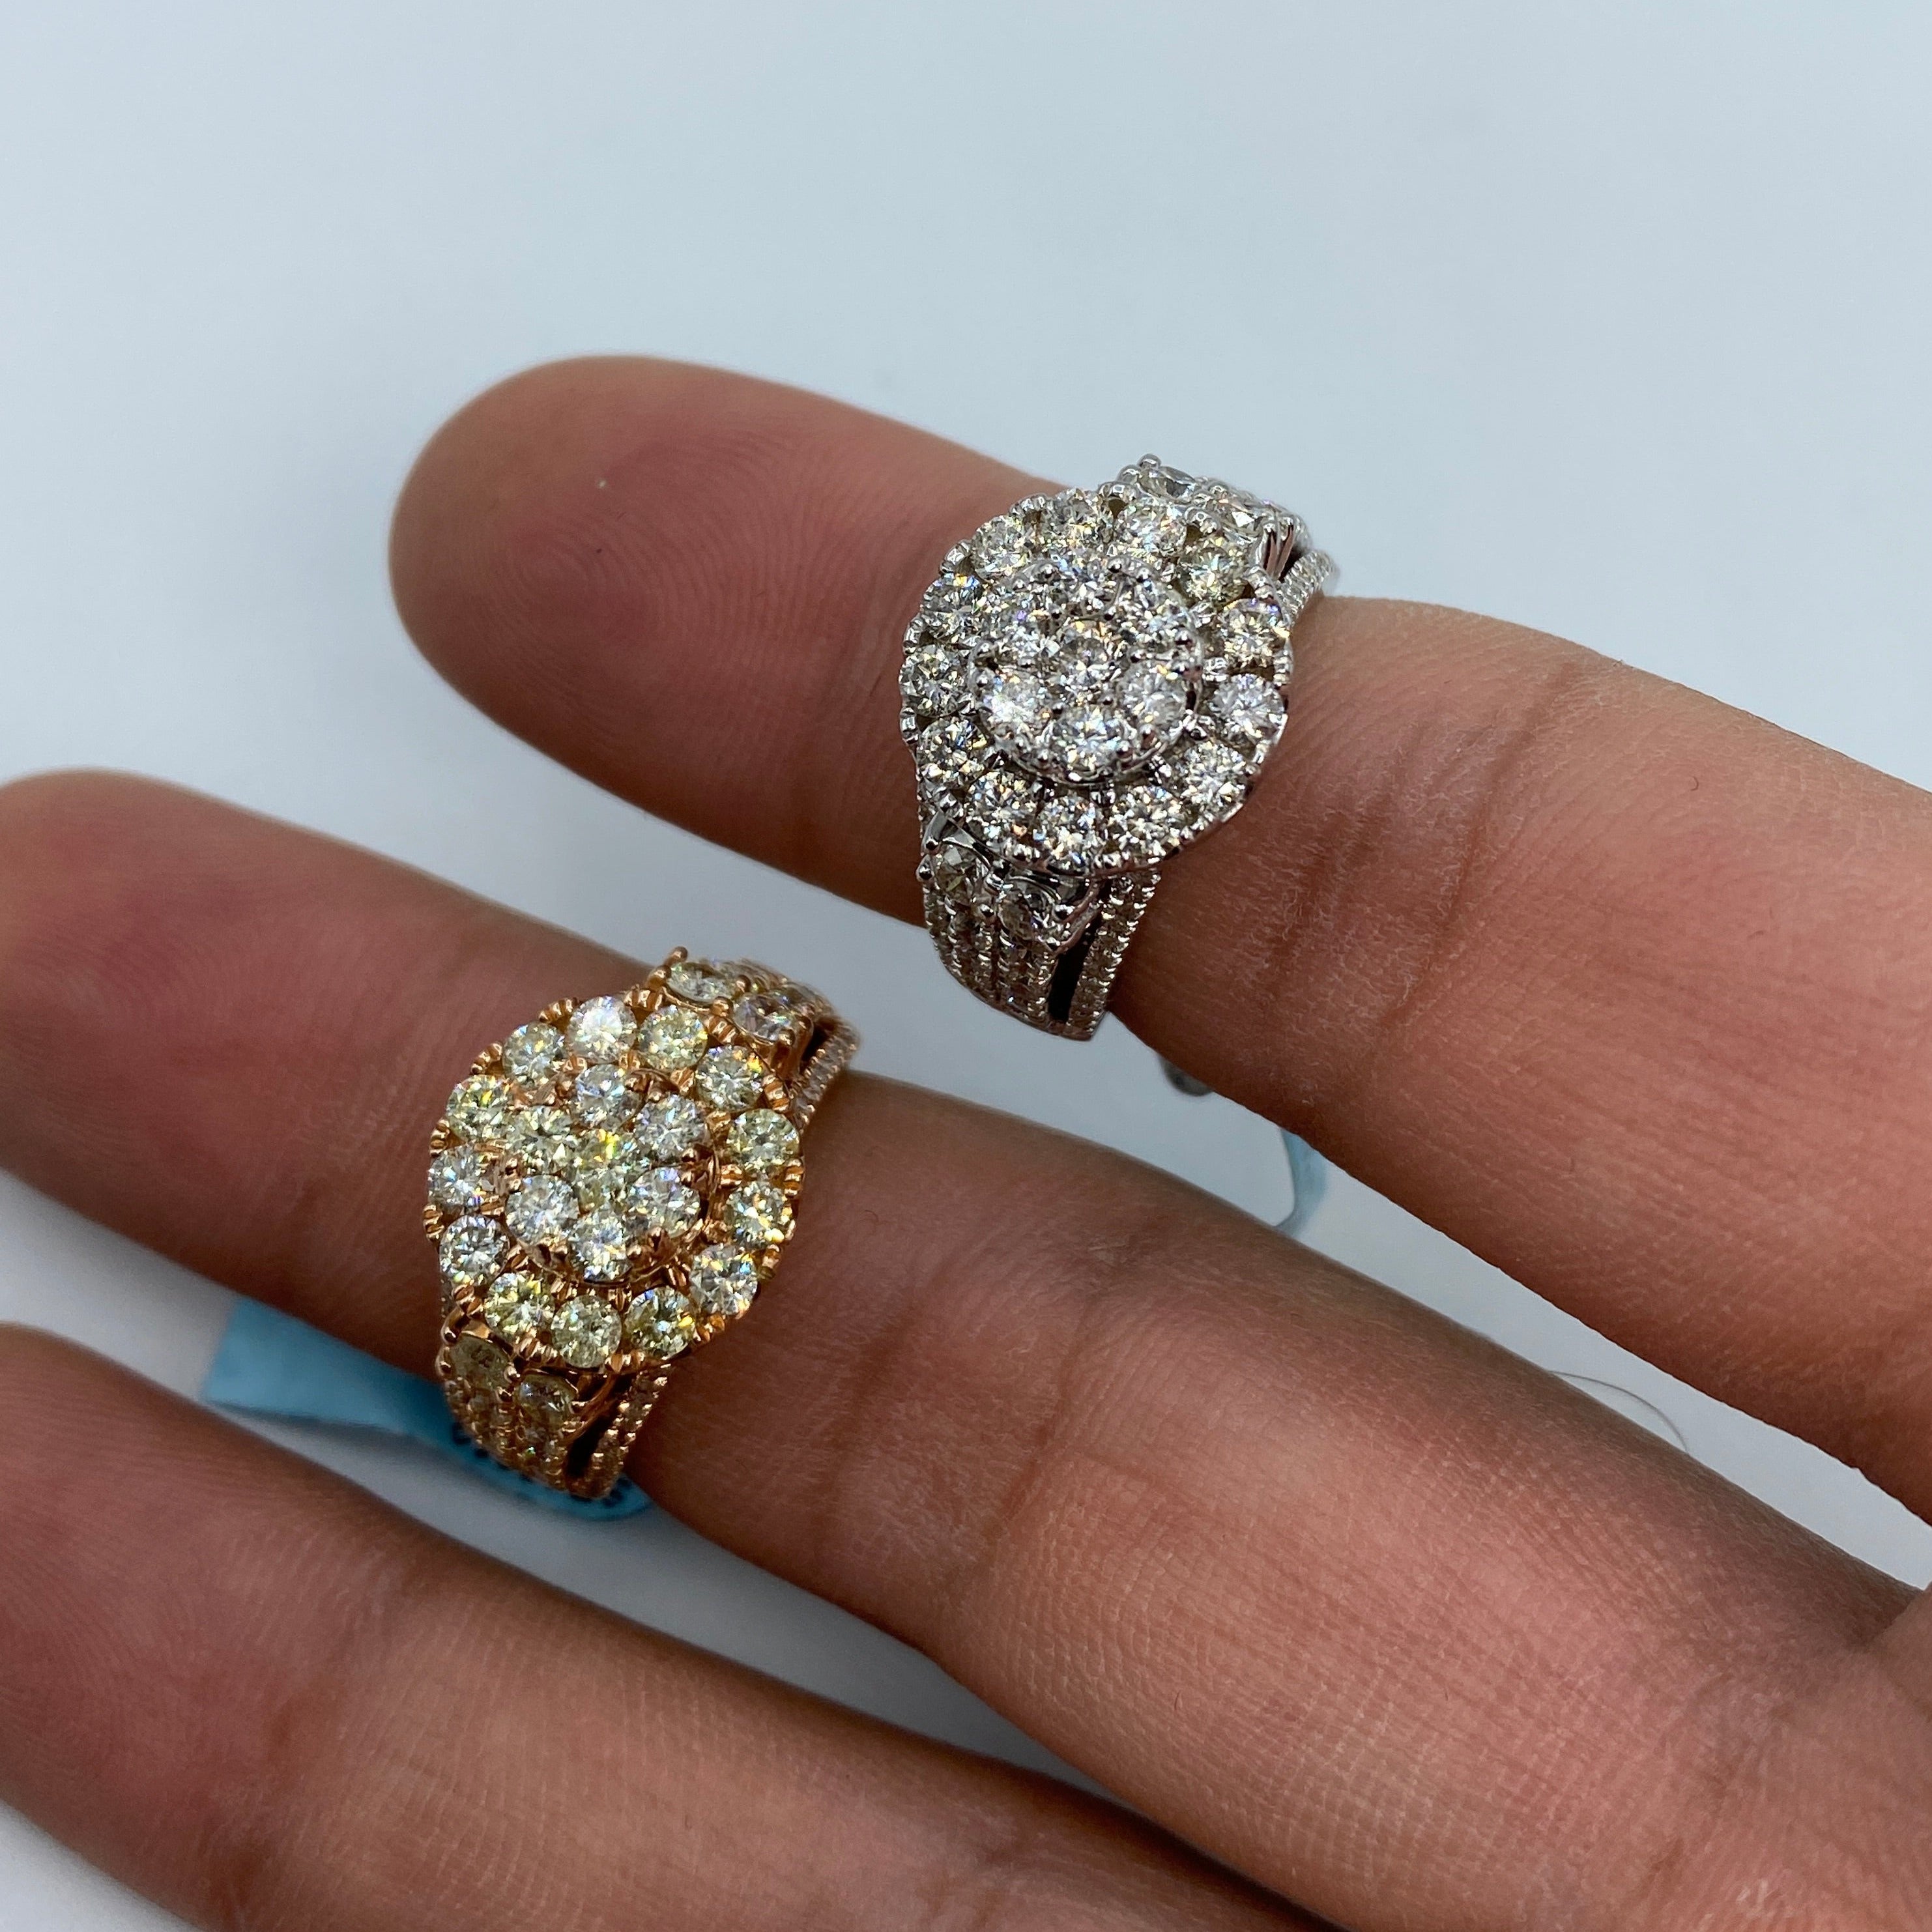 Triple Flower Diamond Ring - Yaffie White Gold, 1 Carat Total Weight